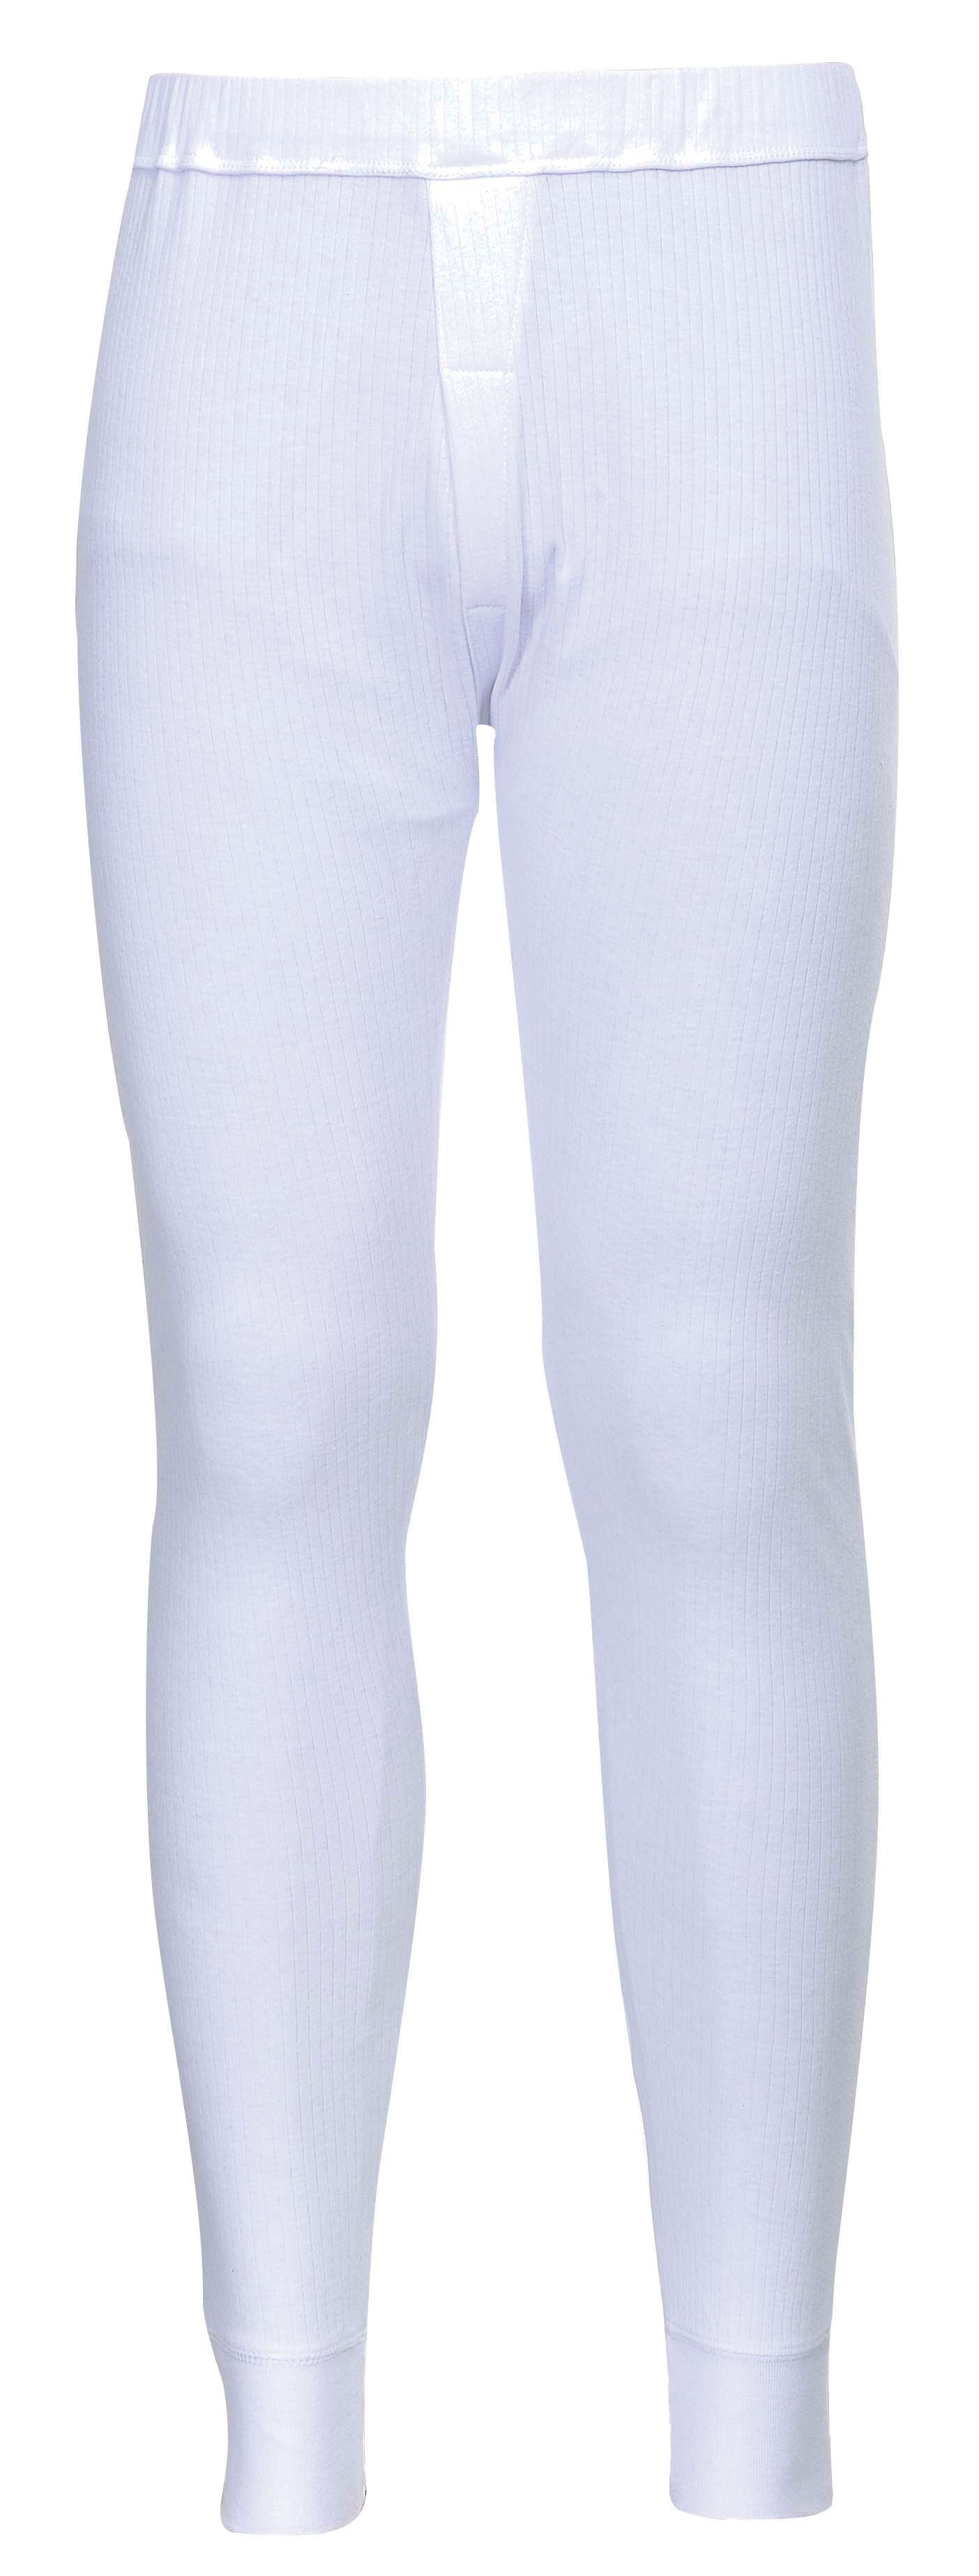 Thermal Trousers - White - Medium